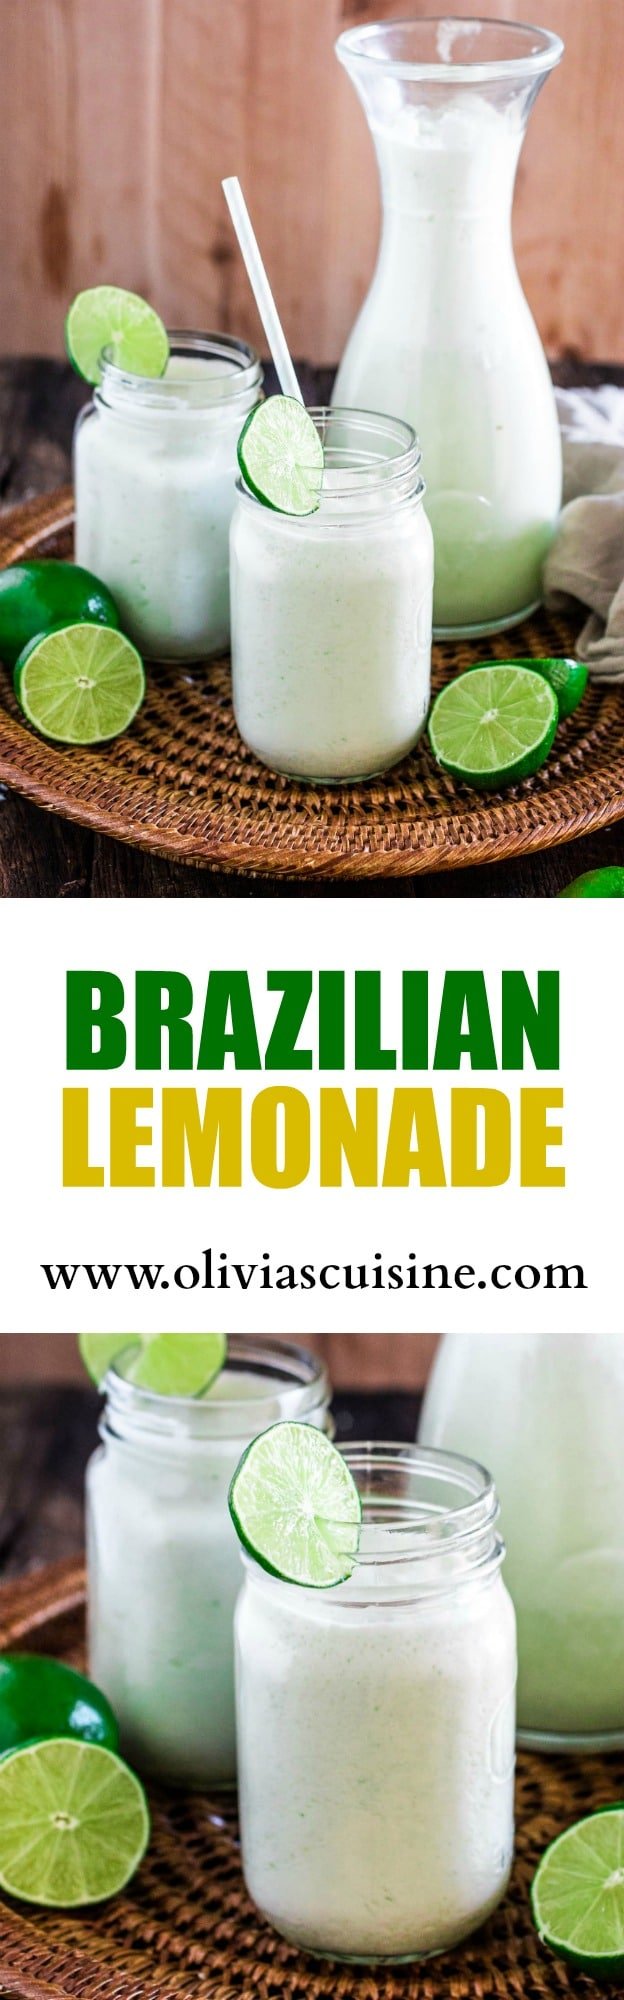 Brazilian Lemonade | www.oliviascuisine.com | The creamiest and sweetest lemonade (or limeade) you have ever tried. The secret? Sweet condensed milk. Sweet just like Brazilians like it!